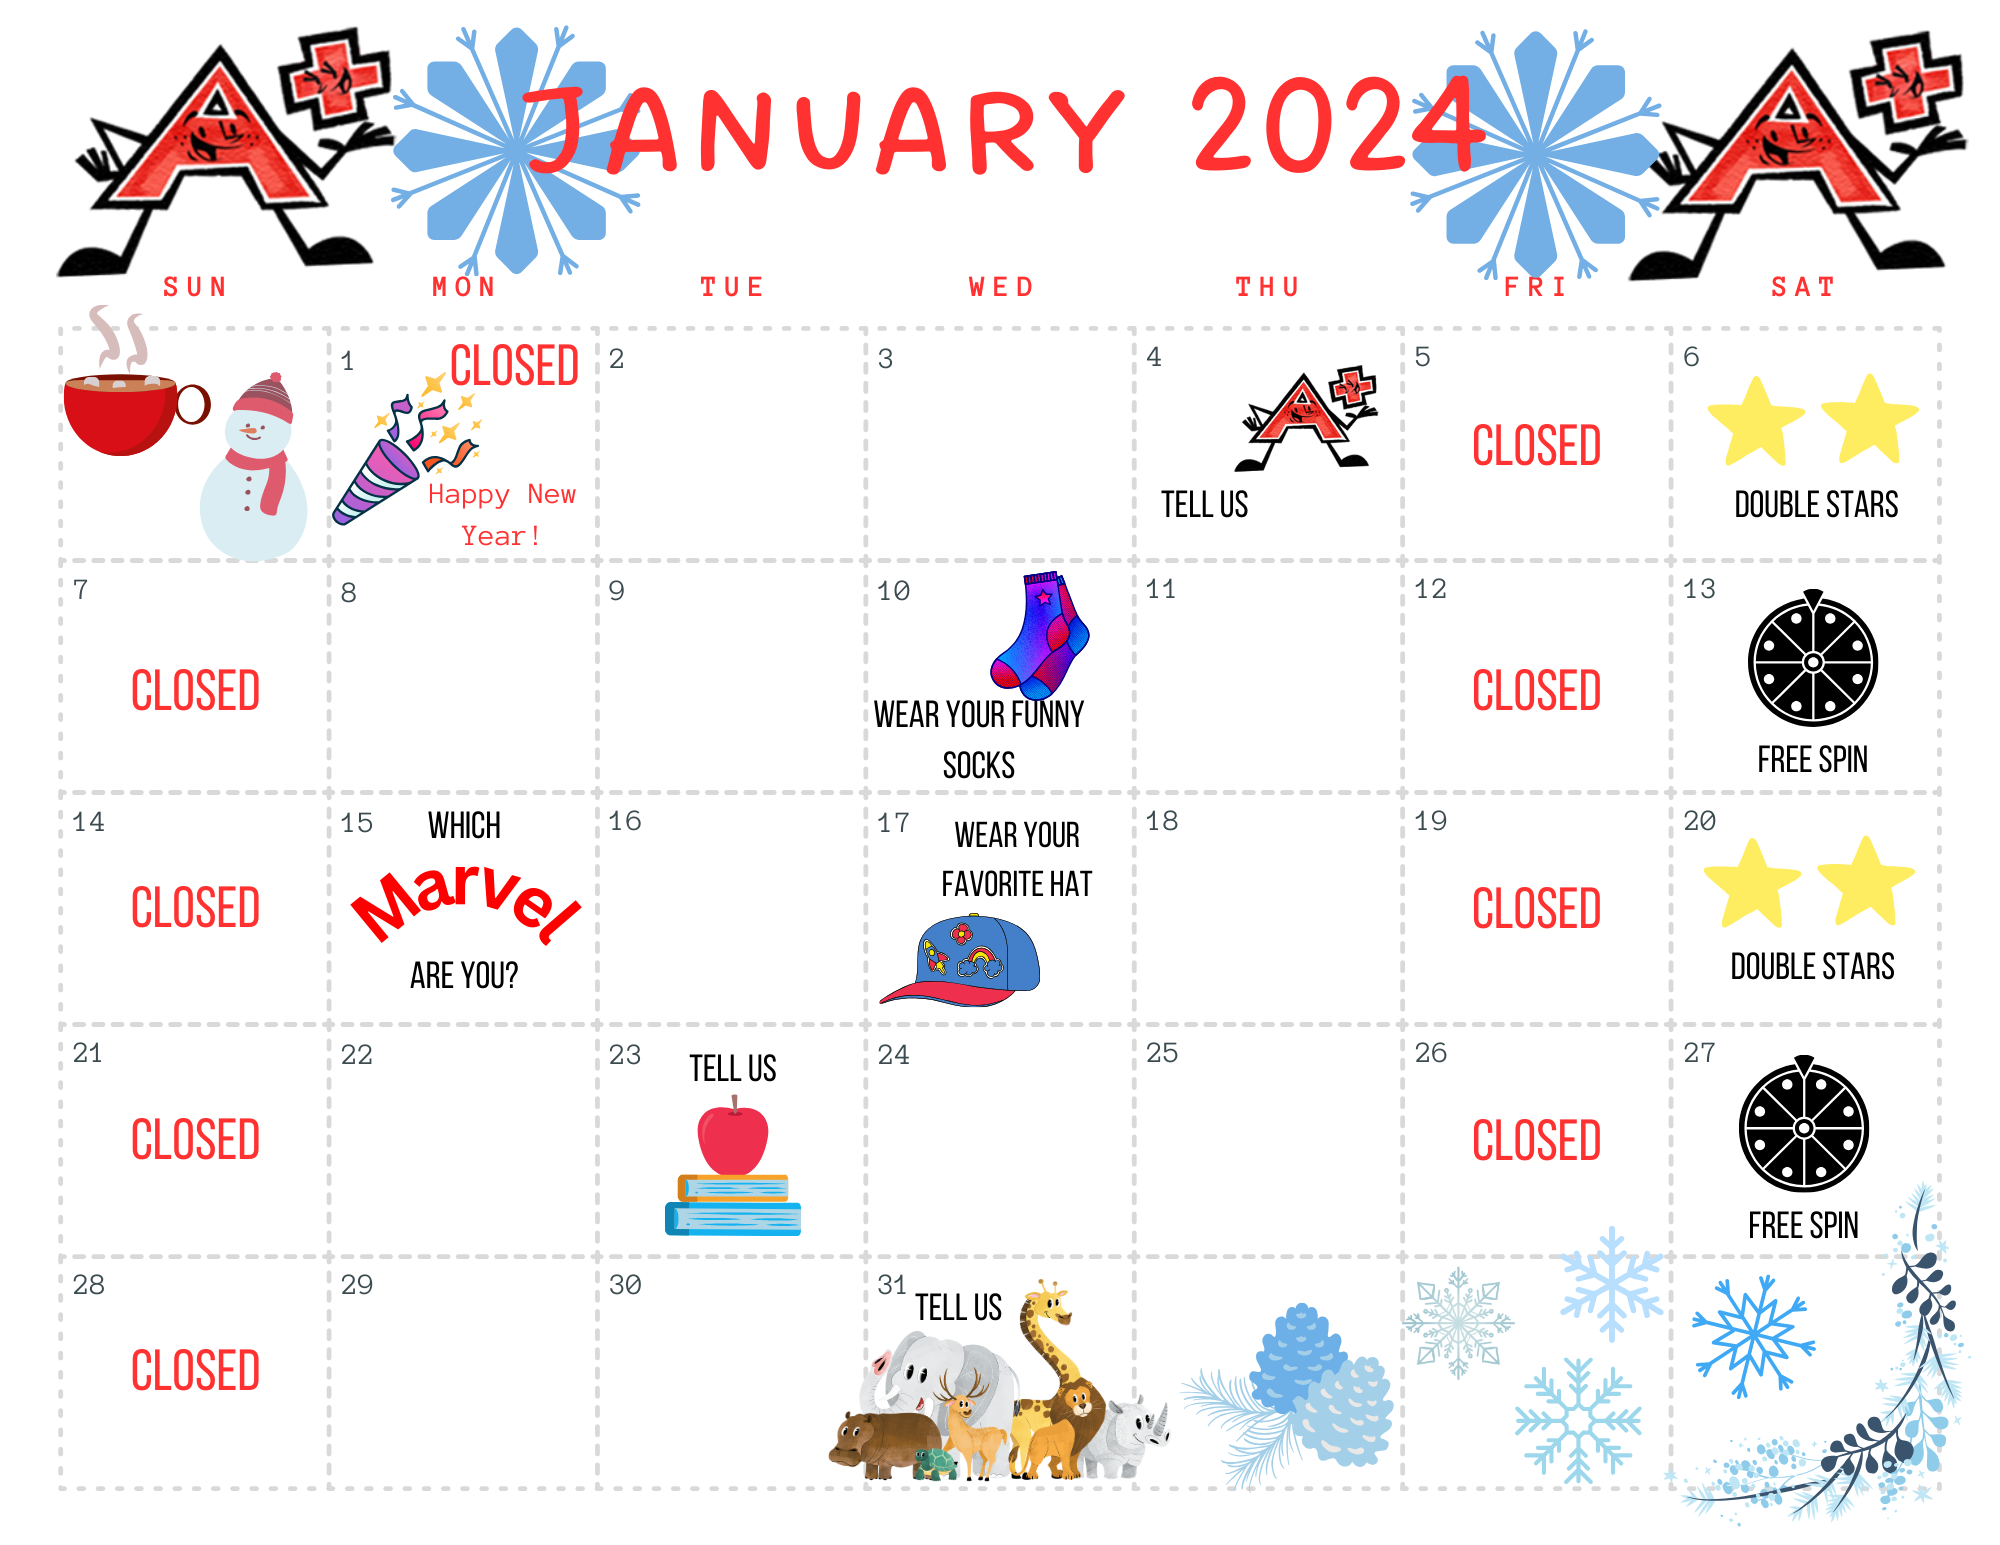 January 2024 Fun Days